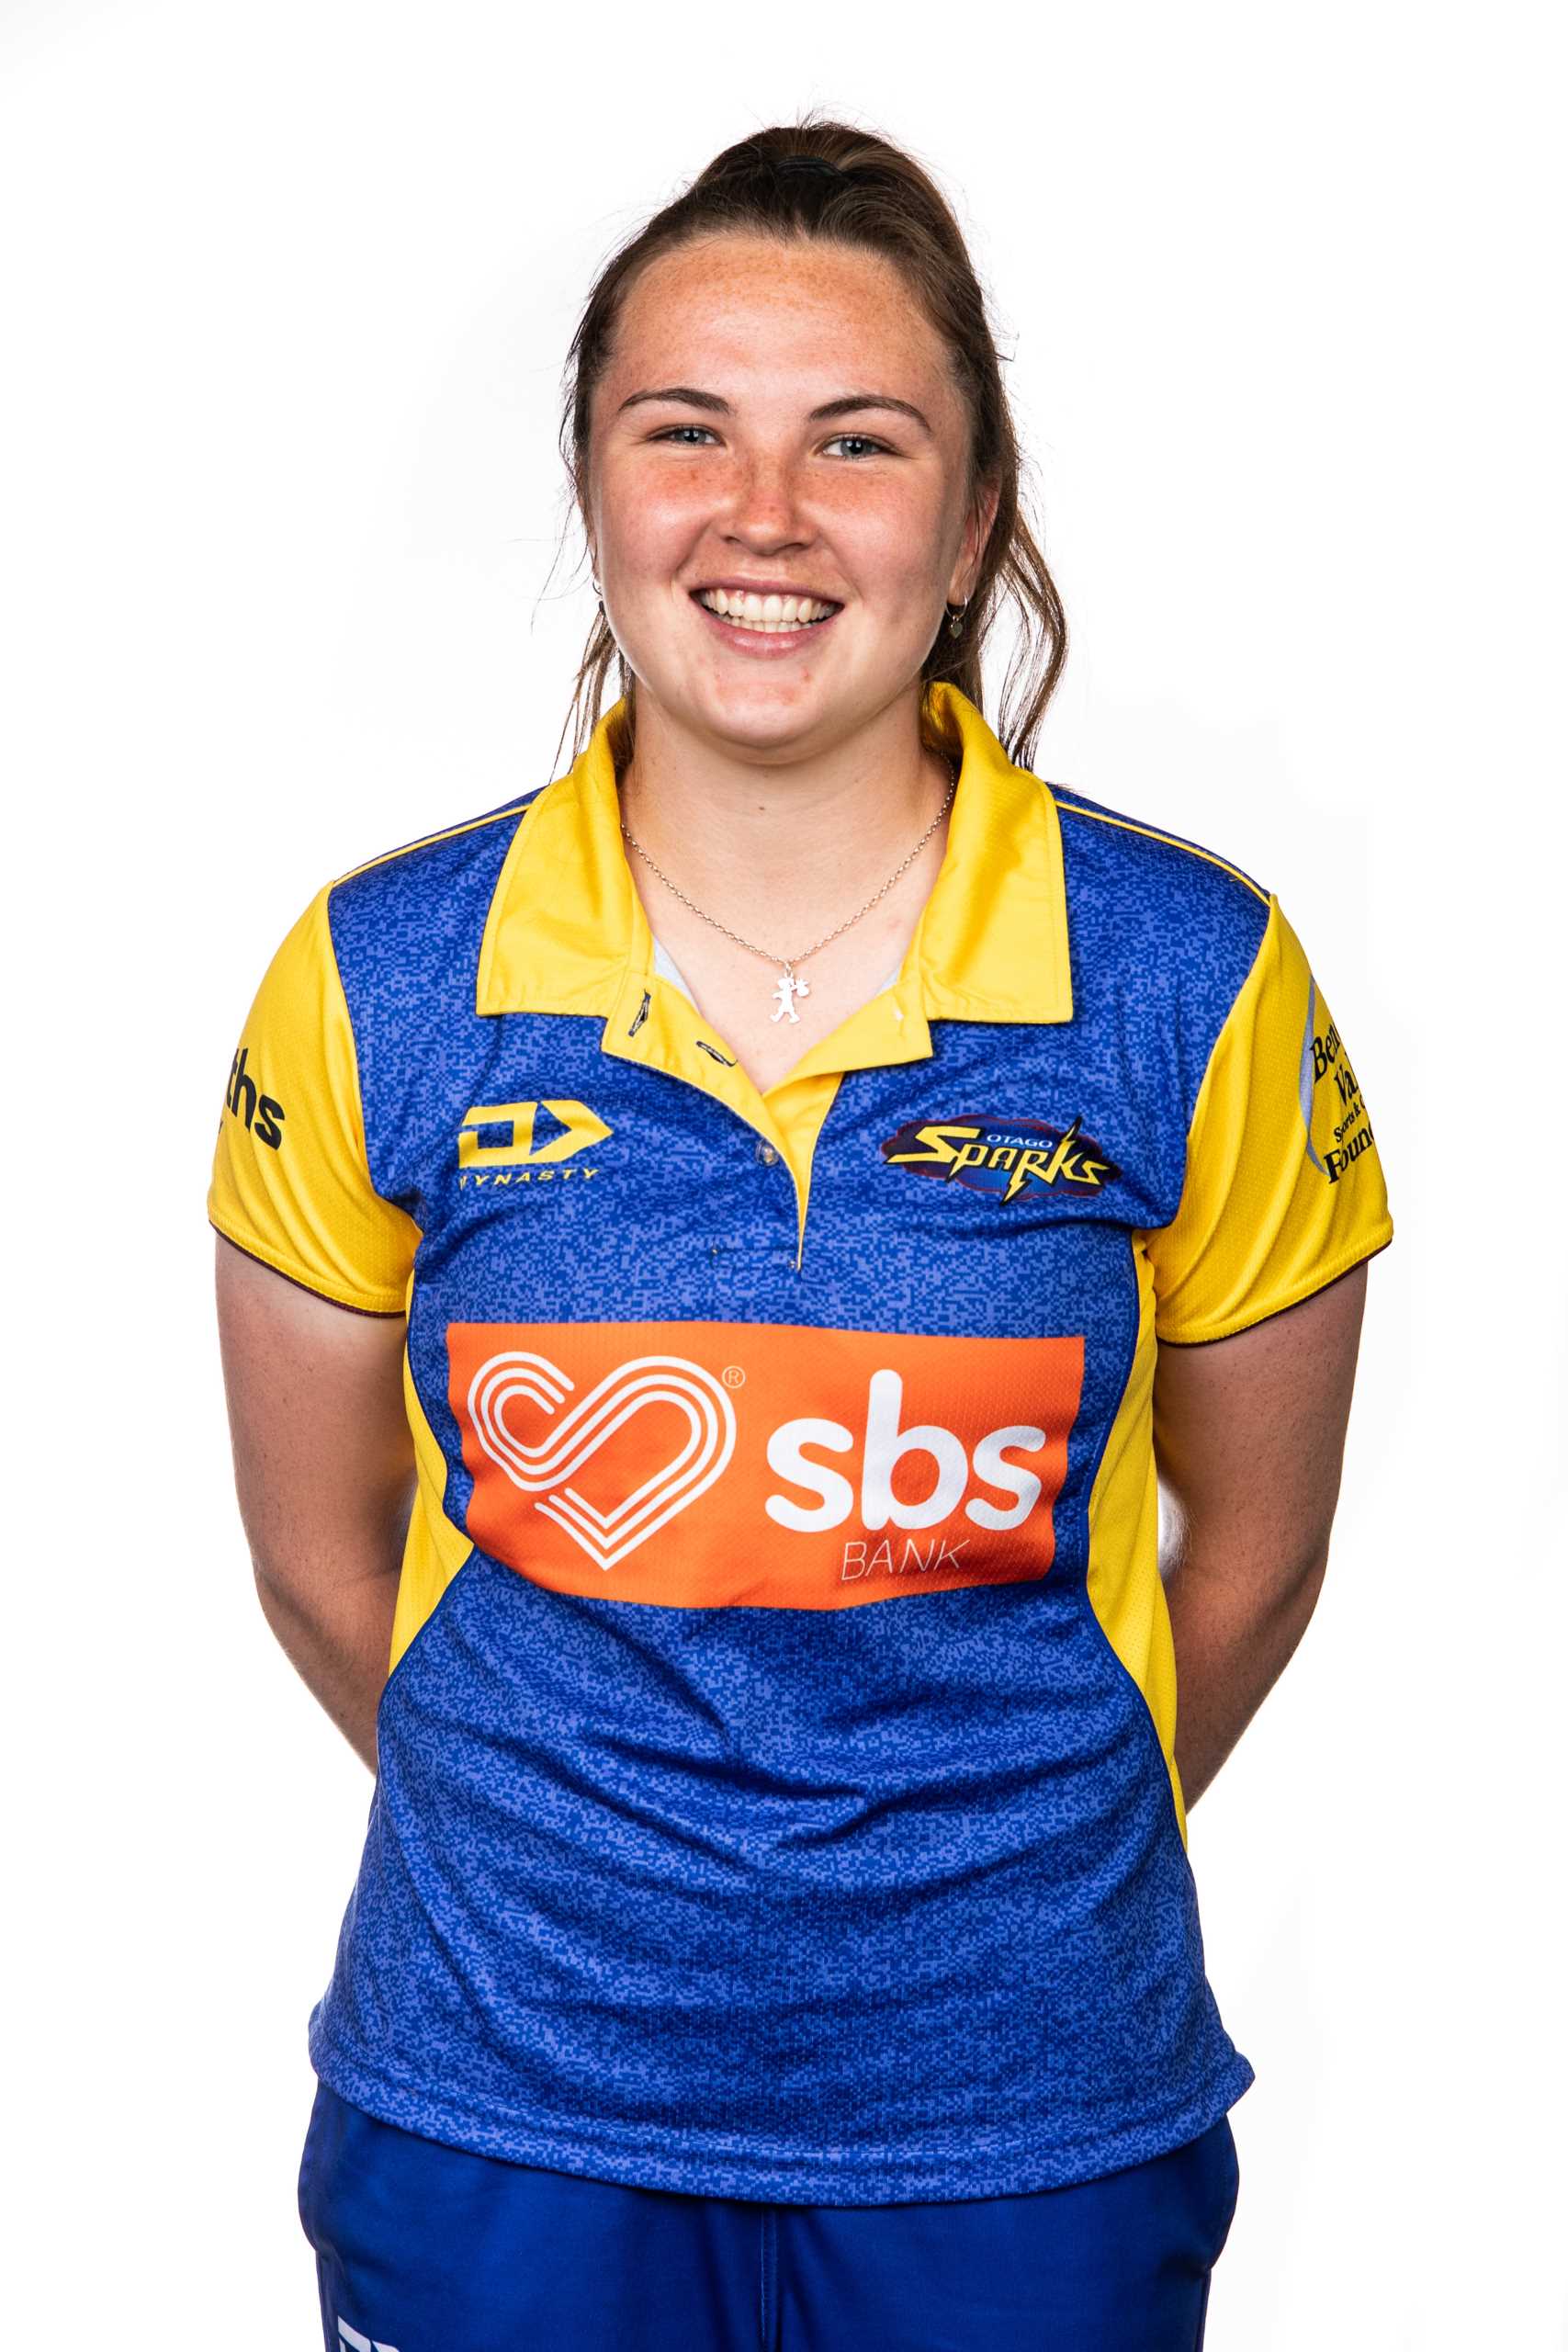 Emma Black. Otago Cricket Portraits, 9th of November 2021. Credit: Joe Allison / www.allisonimages.co.nz